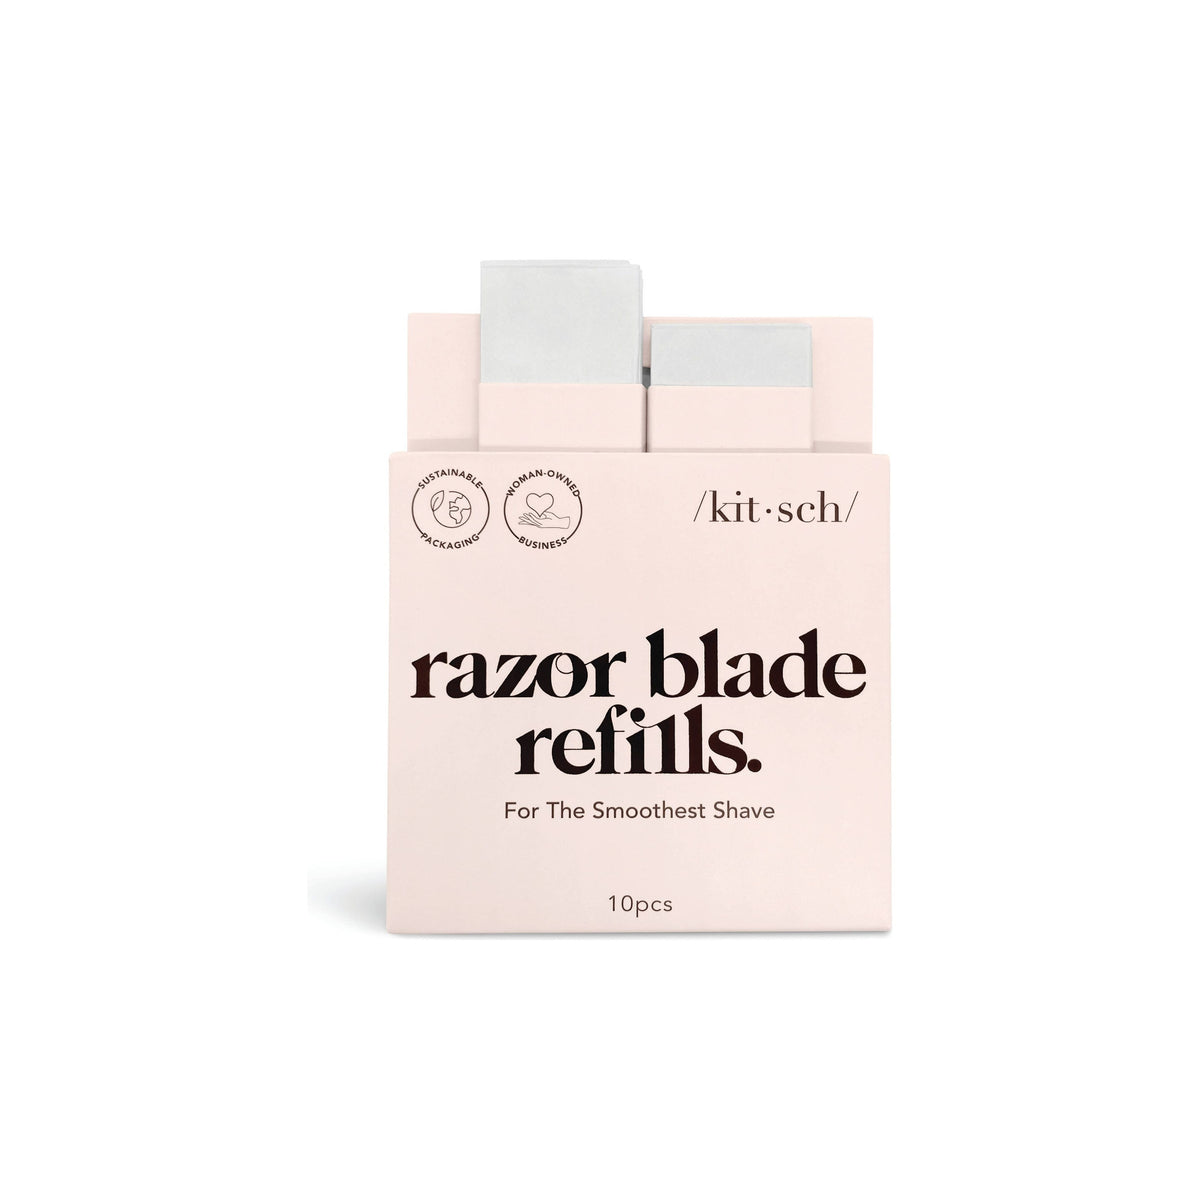 Razor blade refill set - SLATE Boutique & Gifts